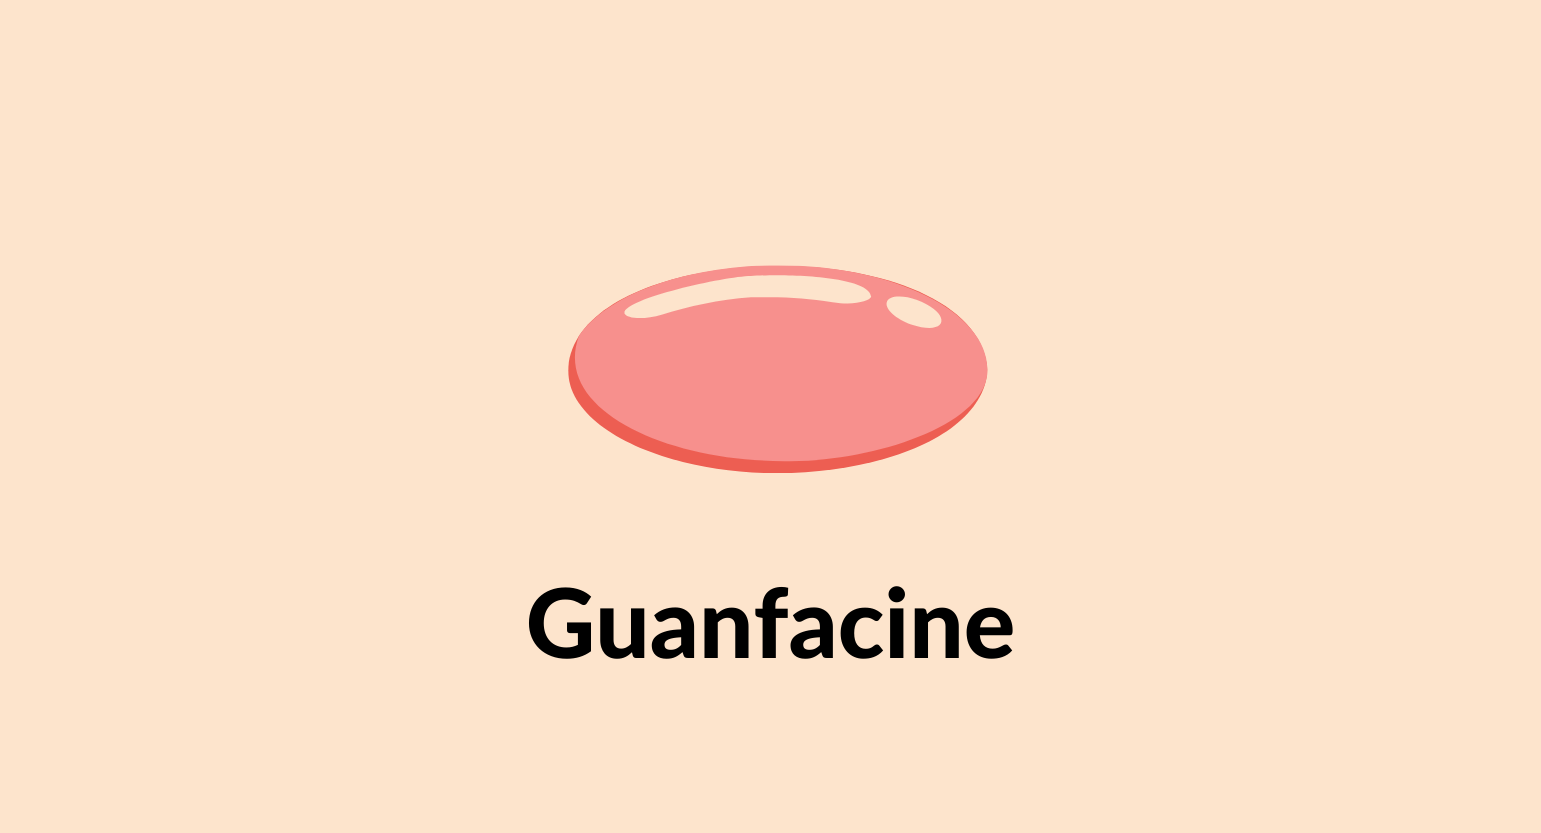 Illustration of a guanfacine gel capsule